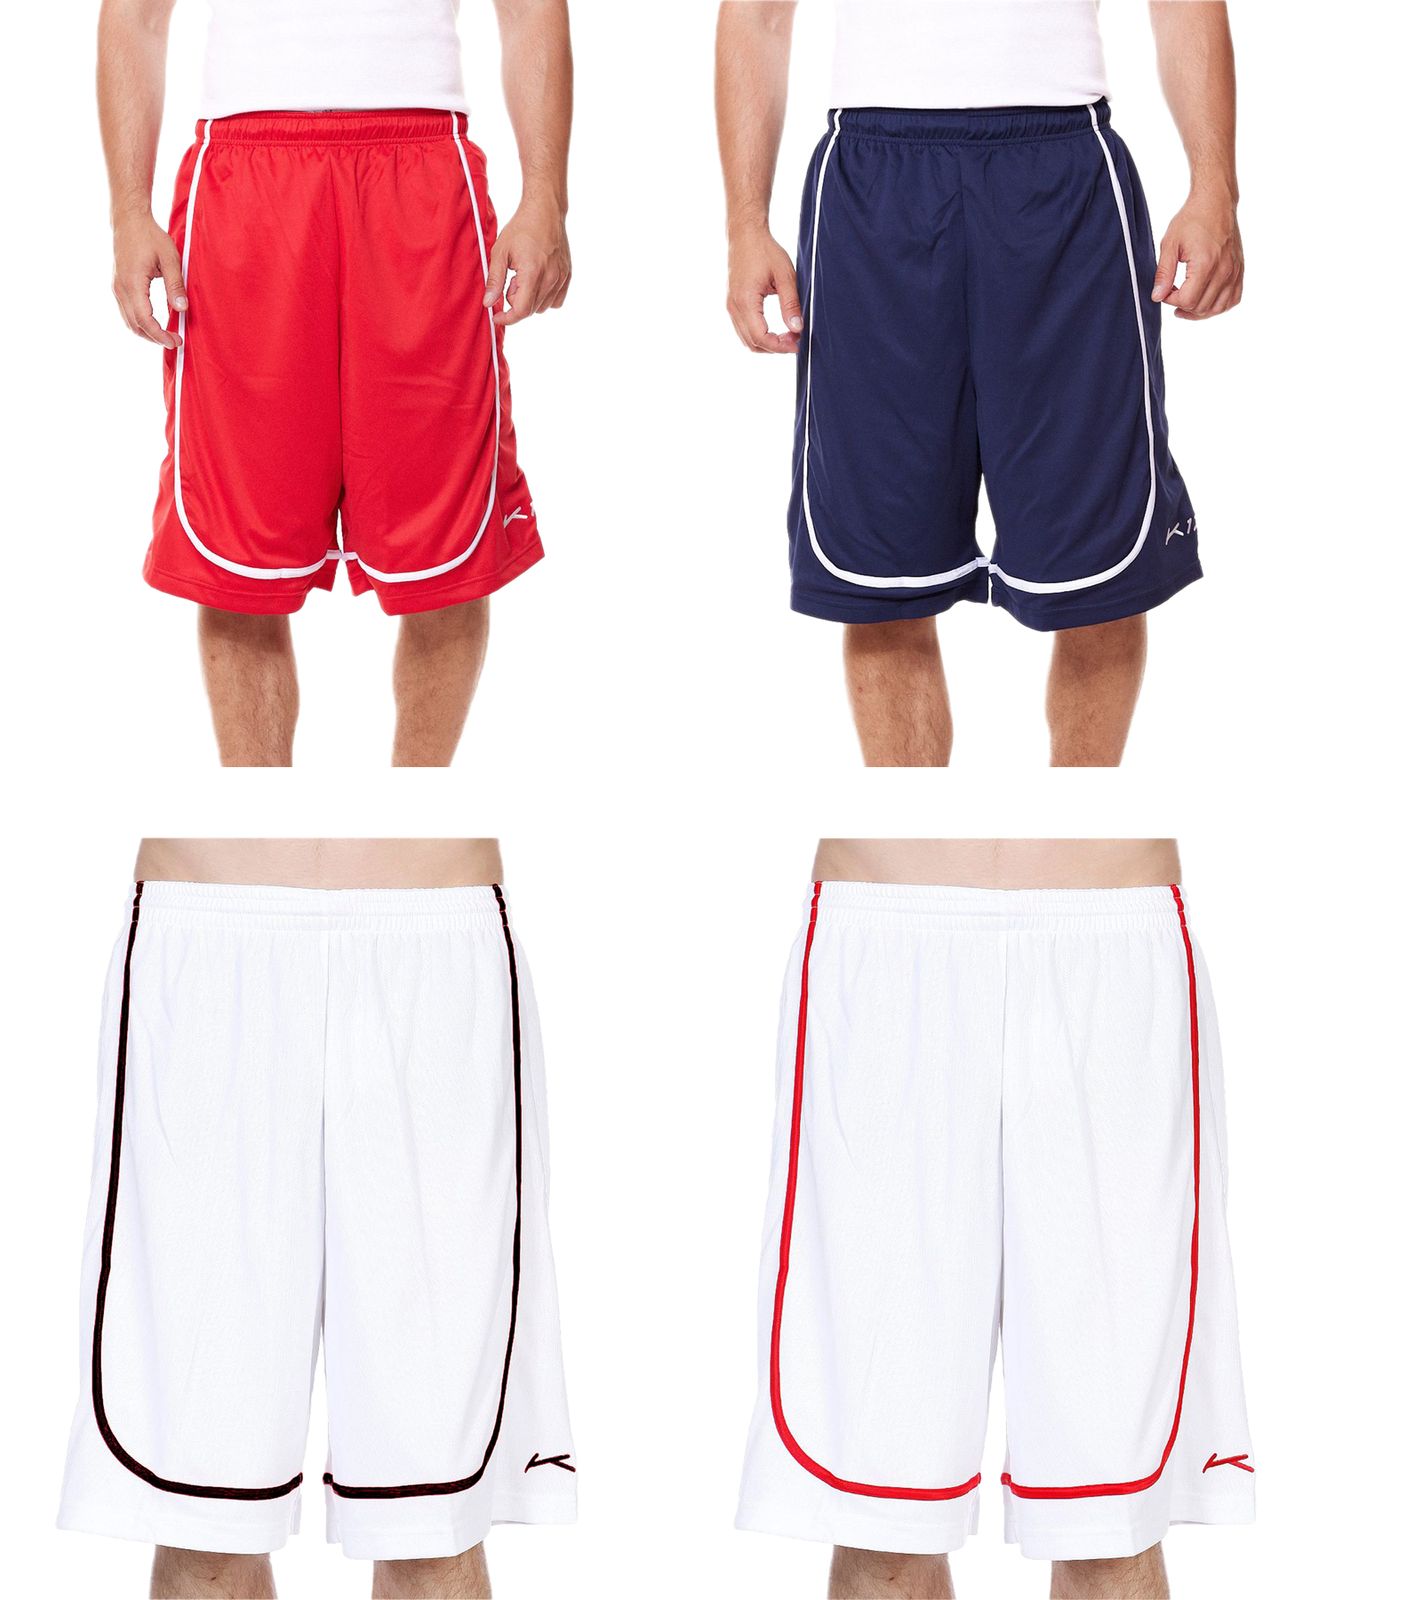 K1X | Kickz Hardwood League Uniform Shorts Herren Basketball-Hose 7401-0003 Rot, Weiß, Blau von K1X | KICKZ